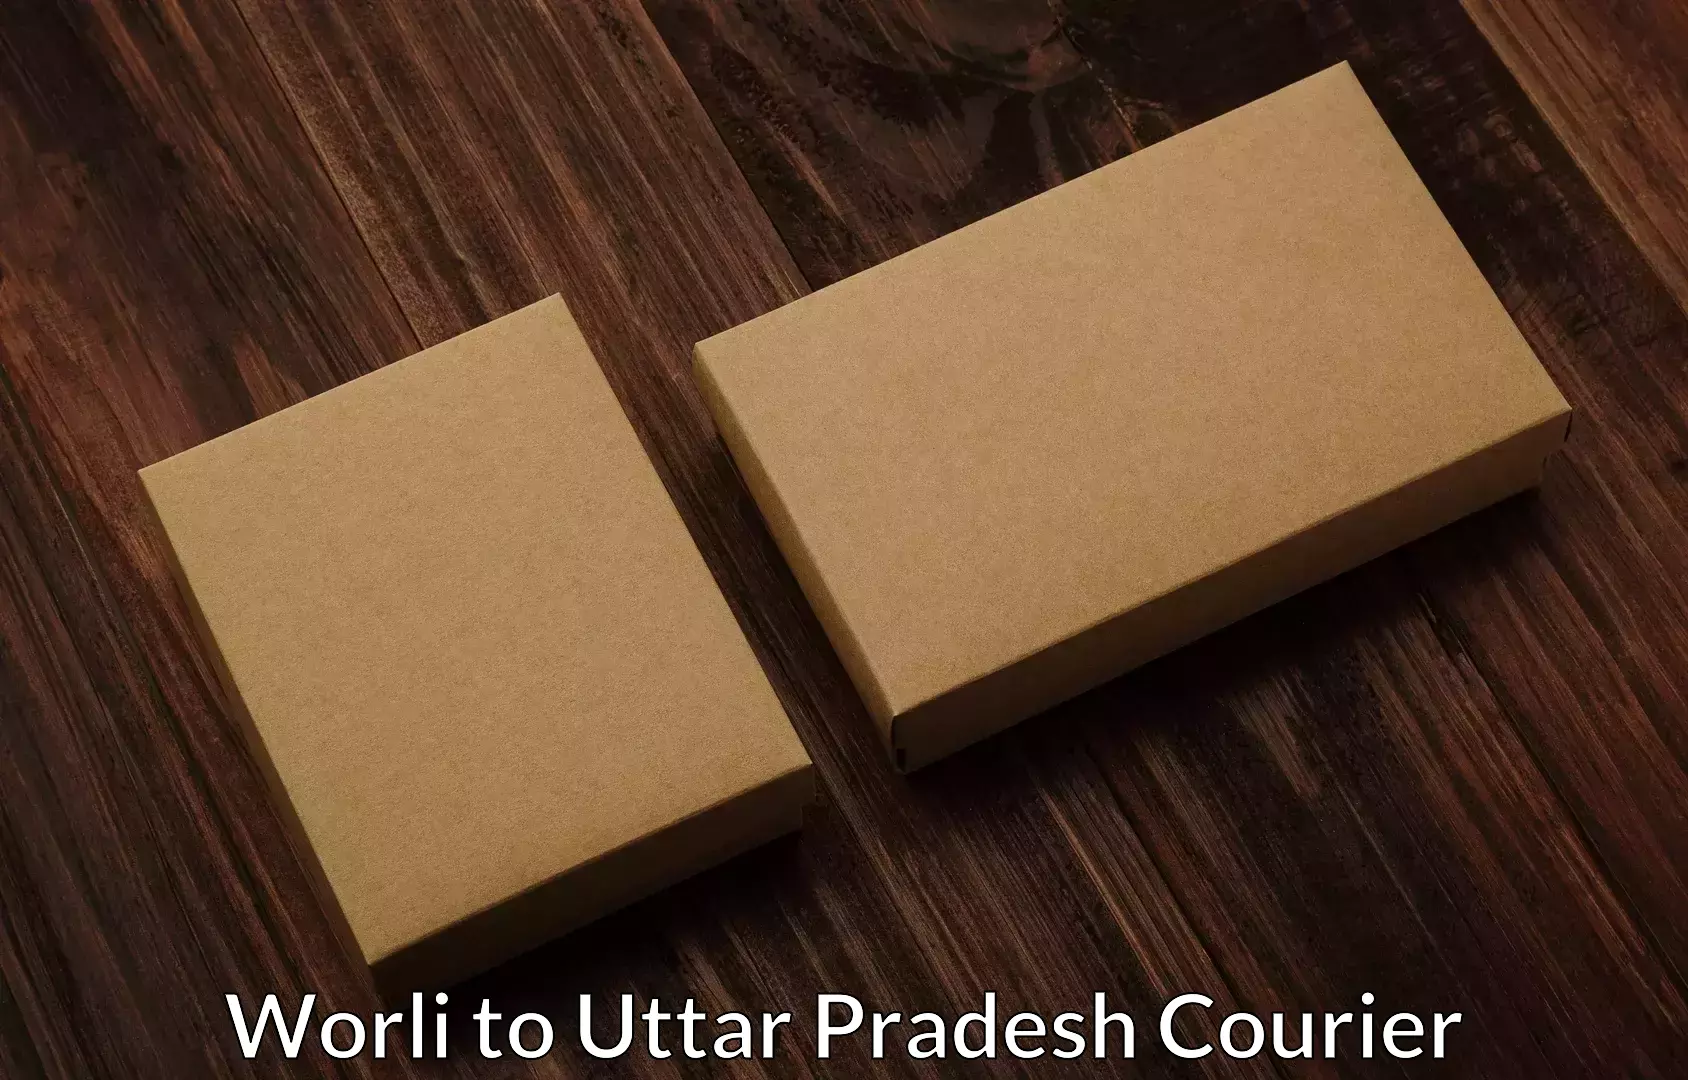 Budget-friendly movers Worli to Uttar Pradesh